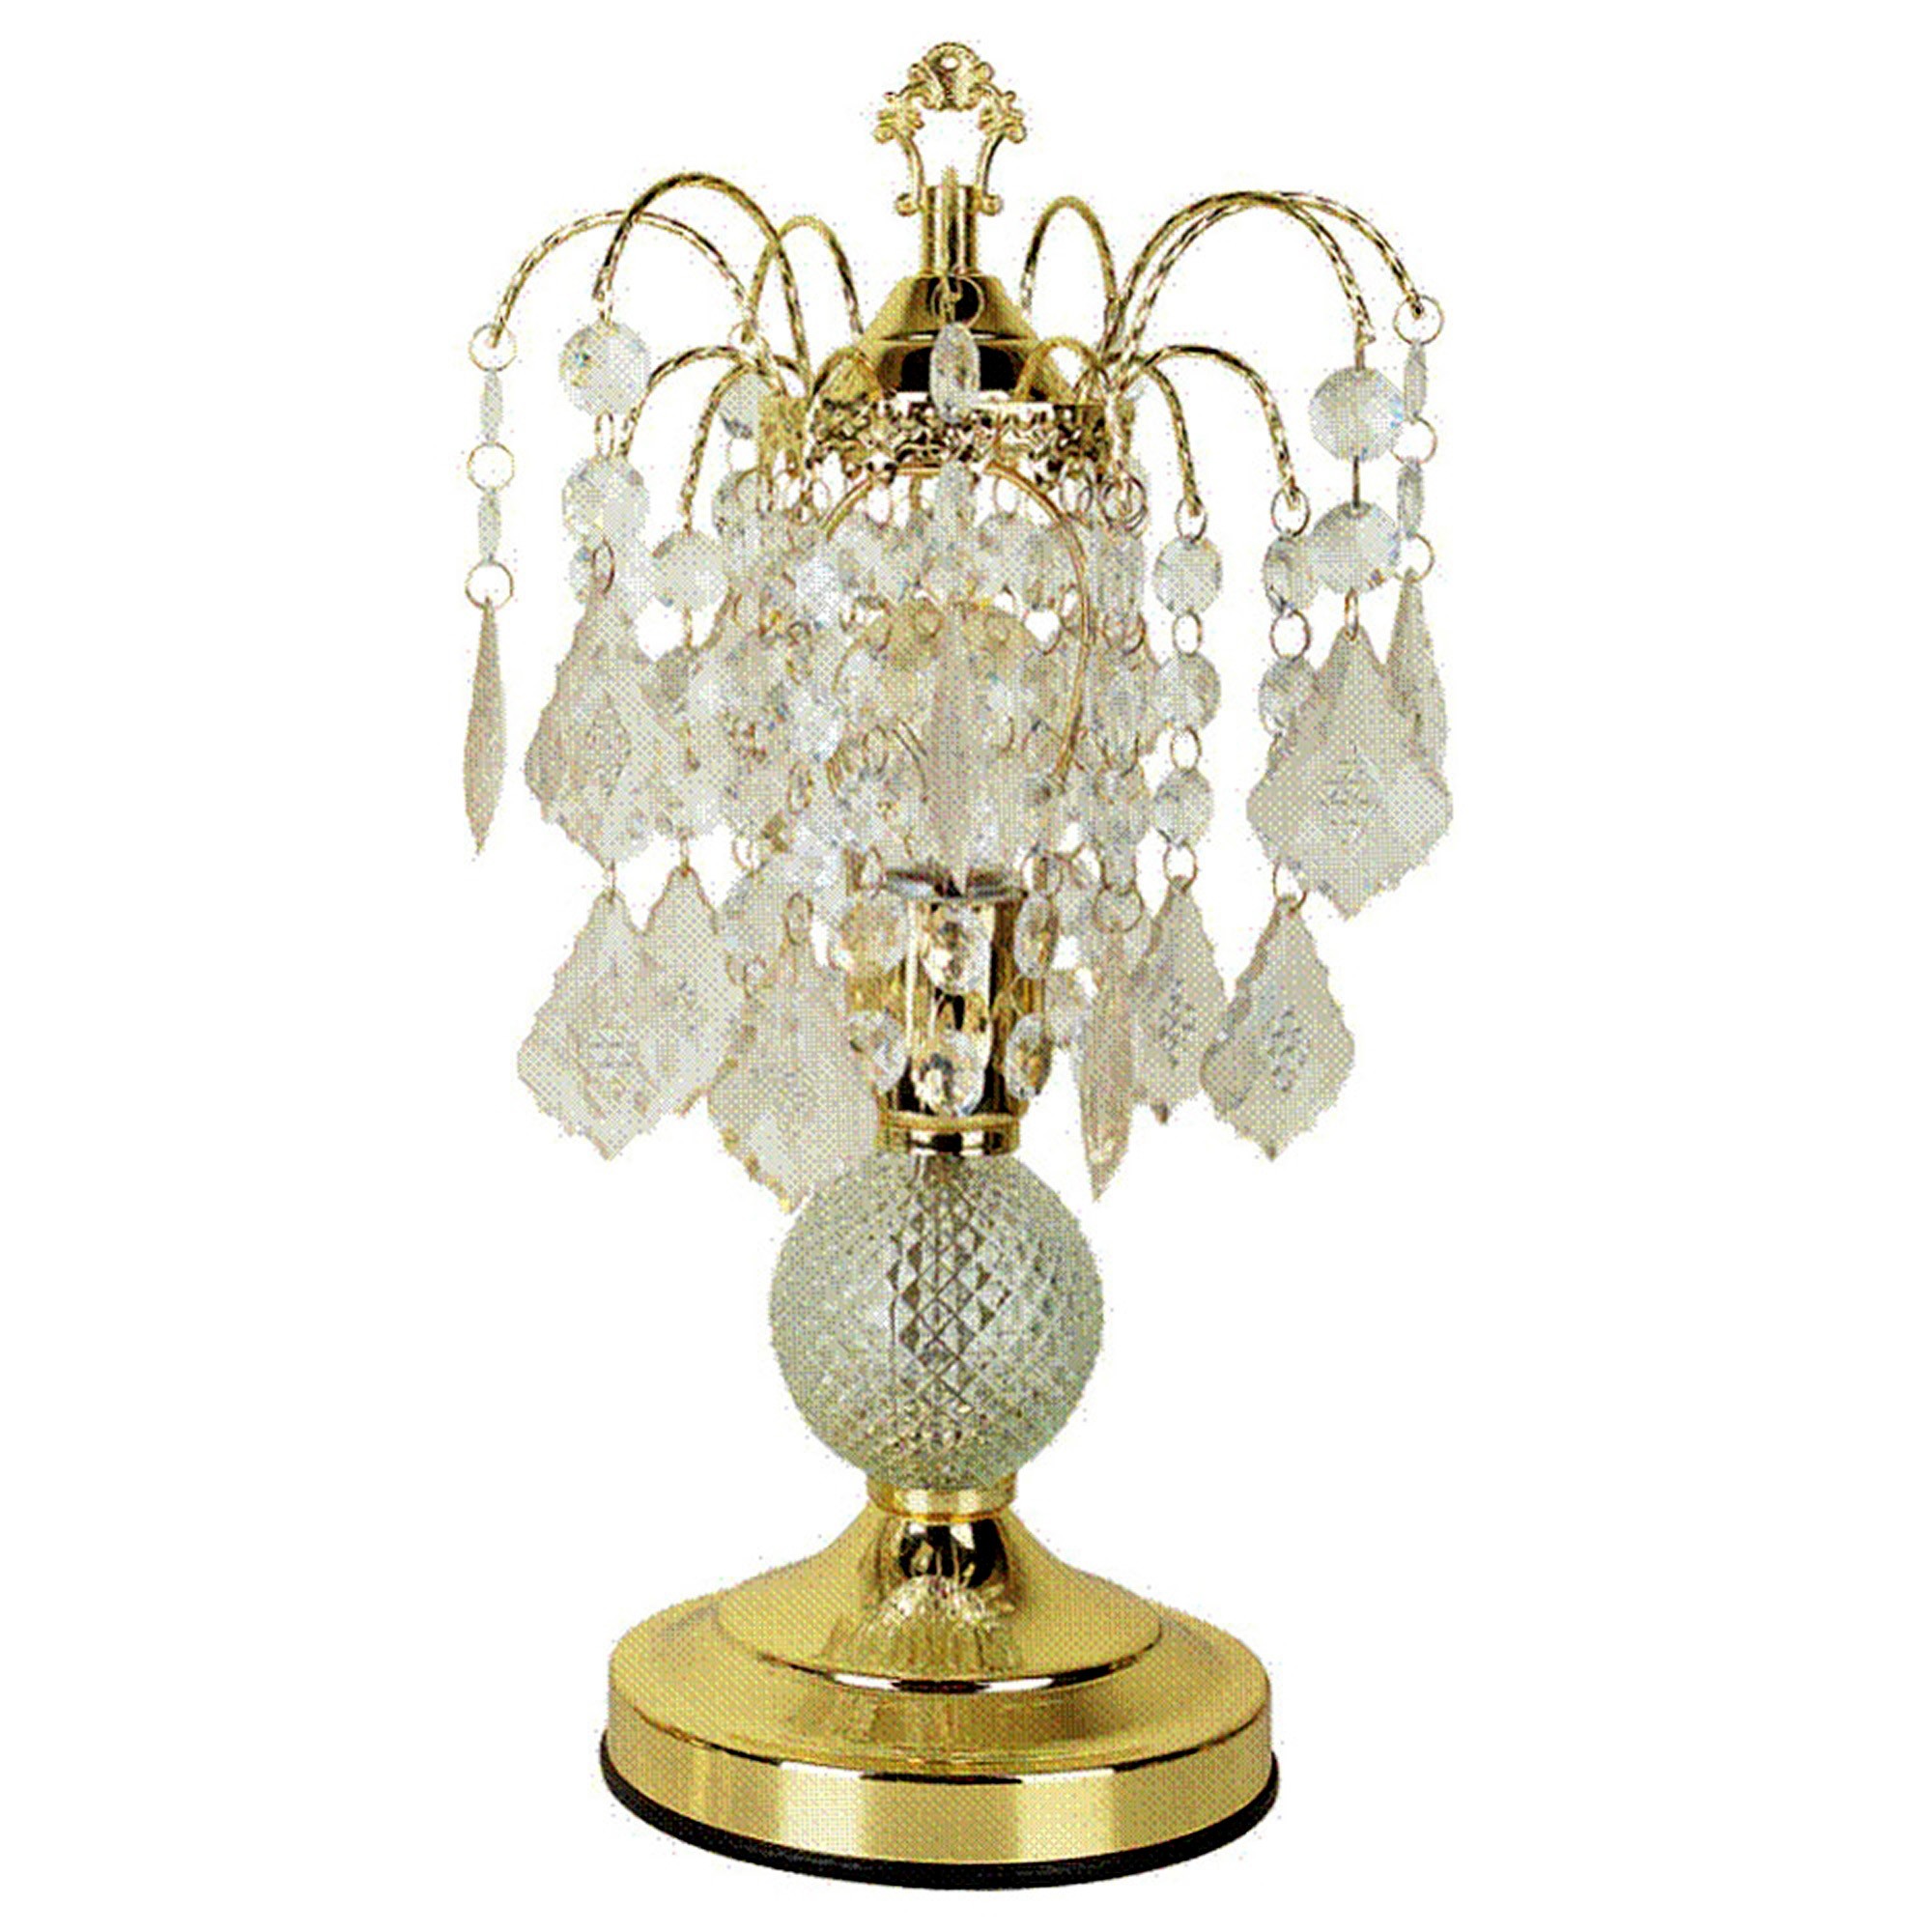 Vintage Gold Glass Chandelier Table Lamp